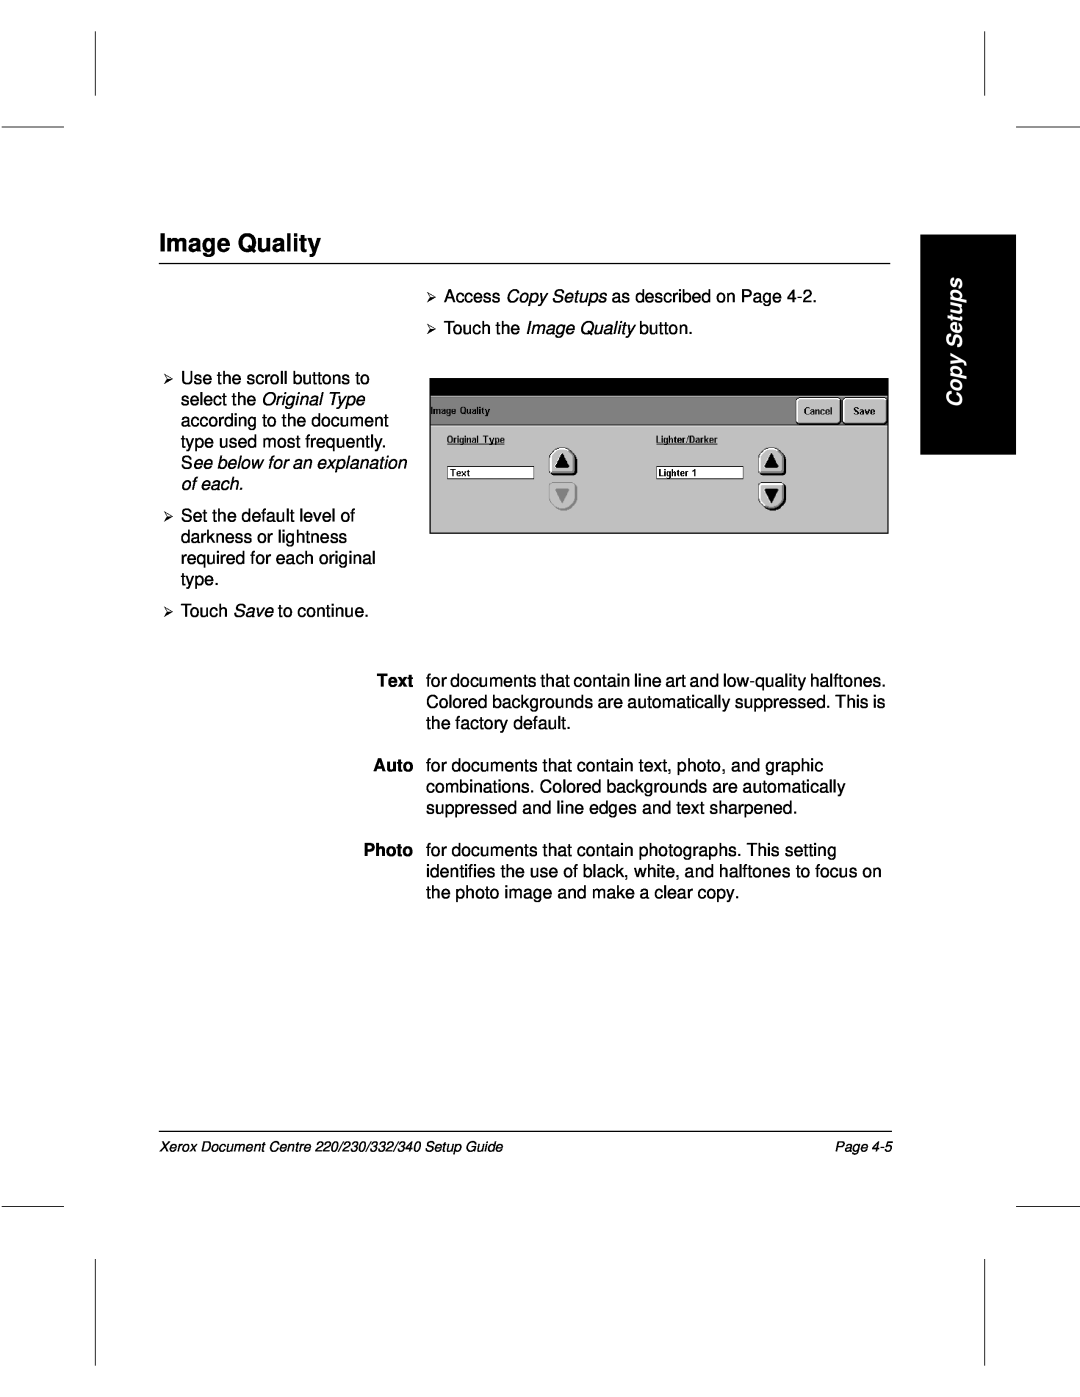 Xerox 230, 340, 332, 220 setup guide Image Quality, Copy Setups, ¿ of each 